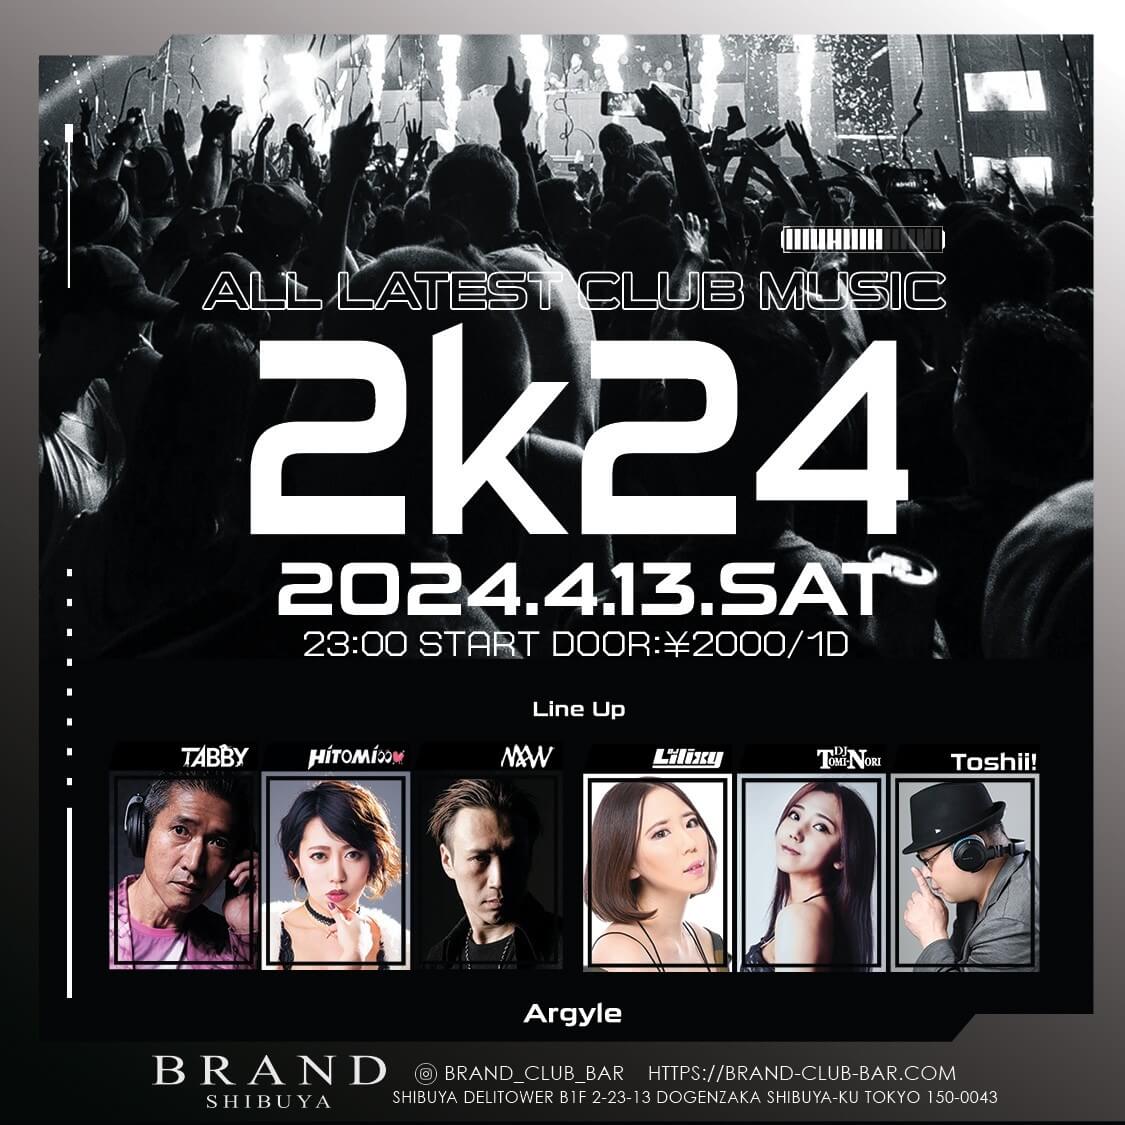 ALL LATEST CLUB MUSIC 2k24 2024年04月13日（土曜日）に渋谷 クラブのBRAND SHIBUYAで開催されるALL MIXイベント